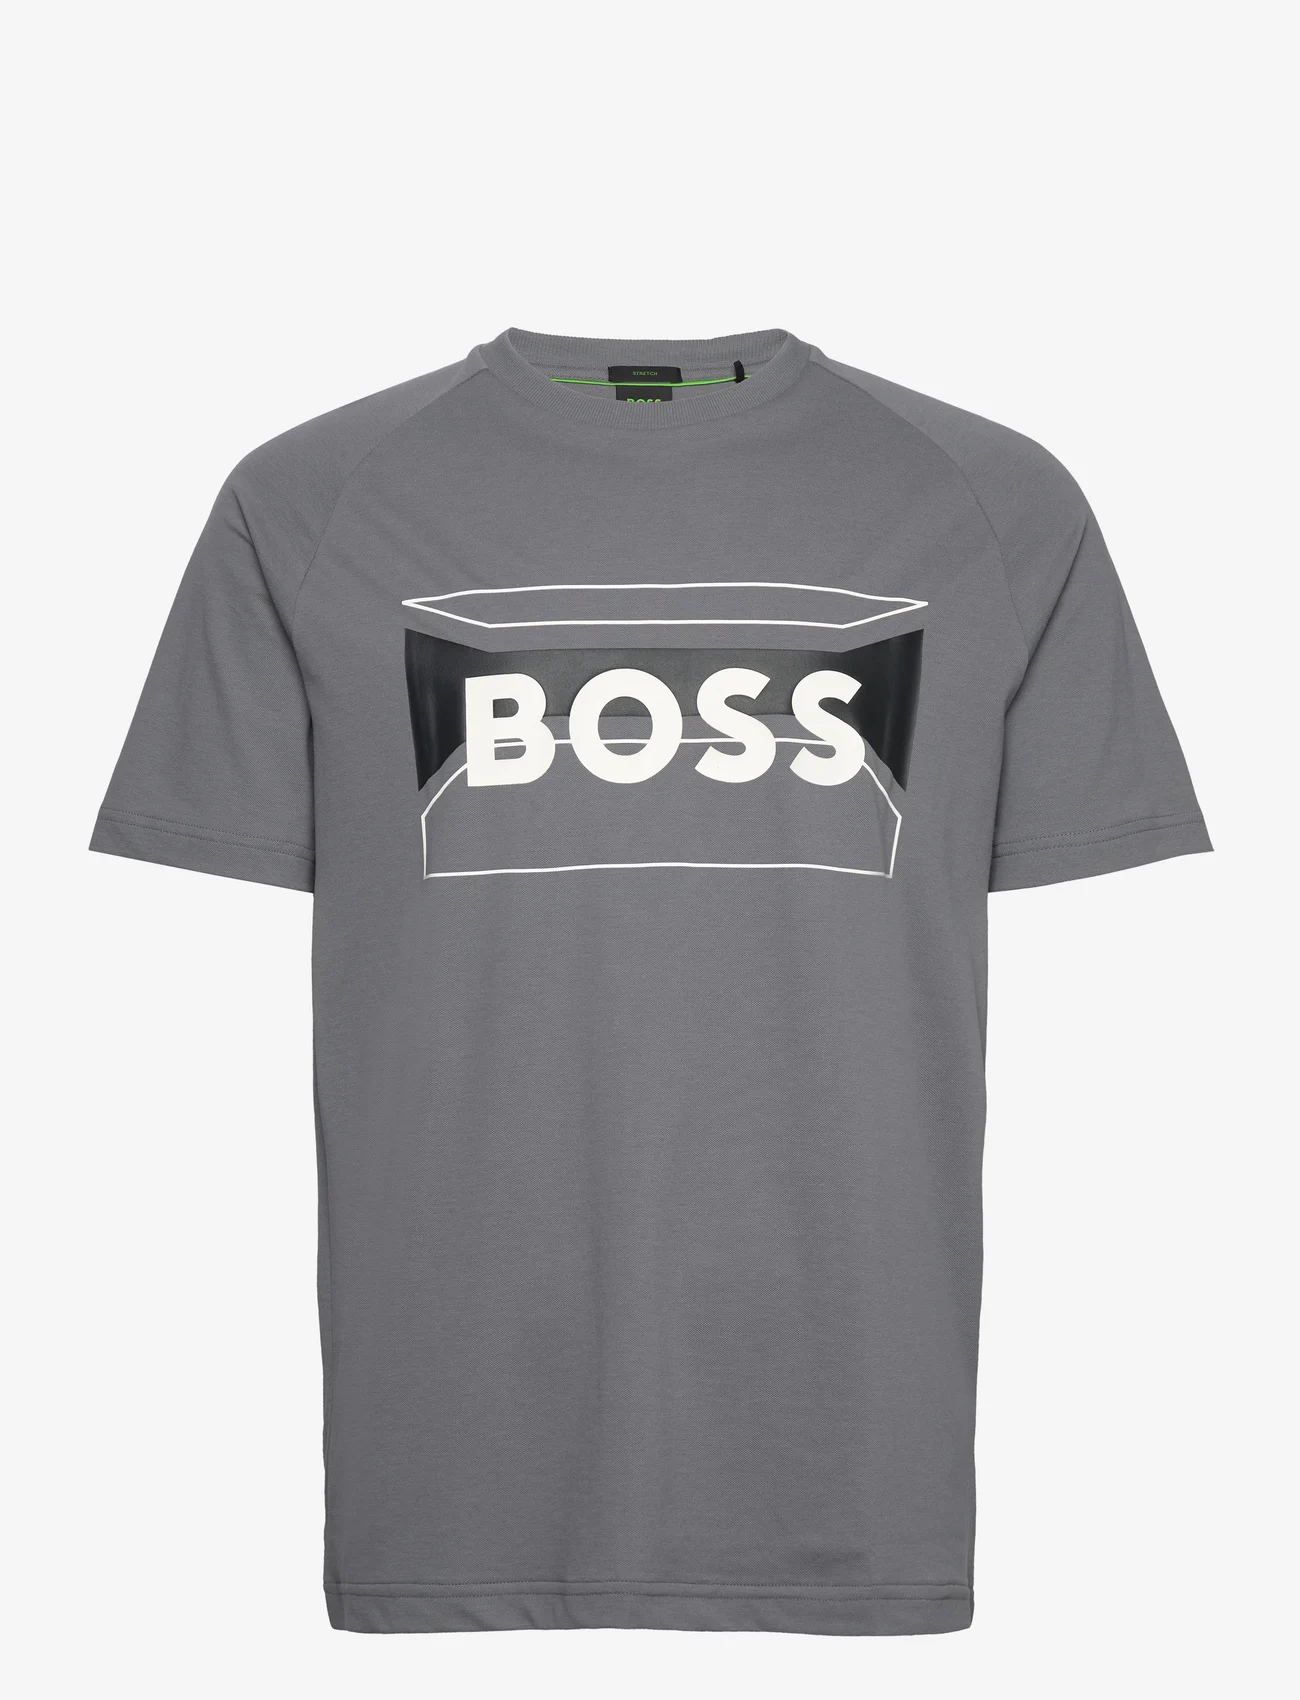 BOSS - Tee 2 - short-sleeved t-shirts - medium grey - 0